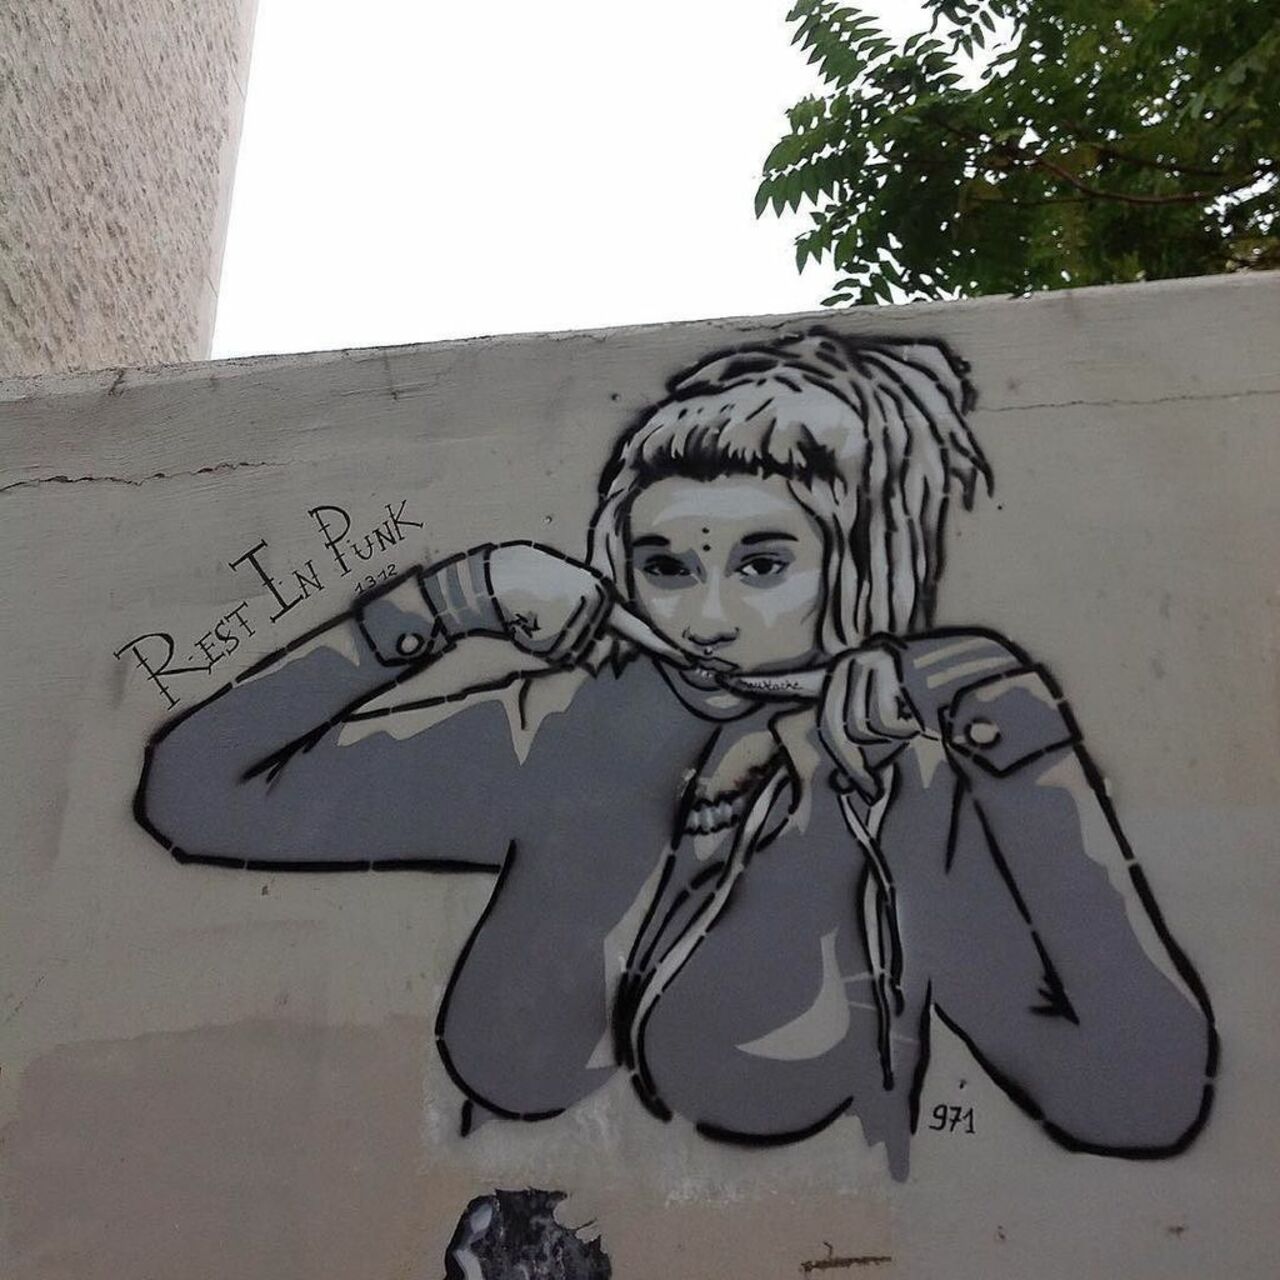 Rest in punk #street #streetart #streetartparis #graff #graffiti #wallart #sprayart #urban #urbain #urbanart #urbai… https://t.co/HFgqxmisDj